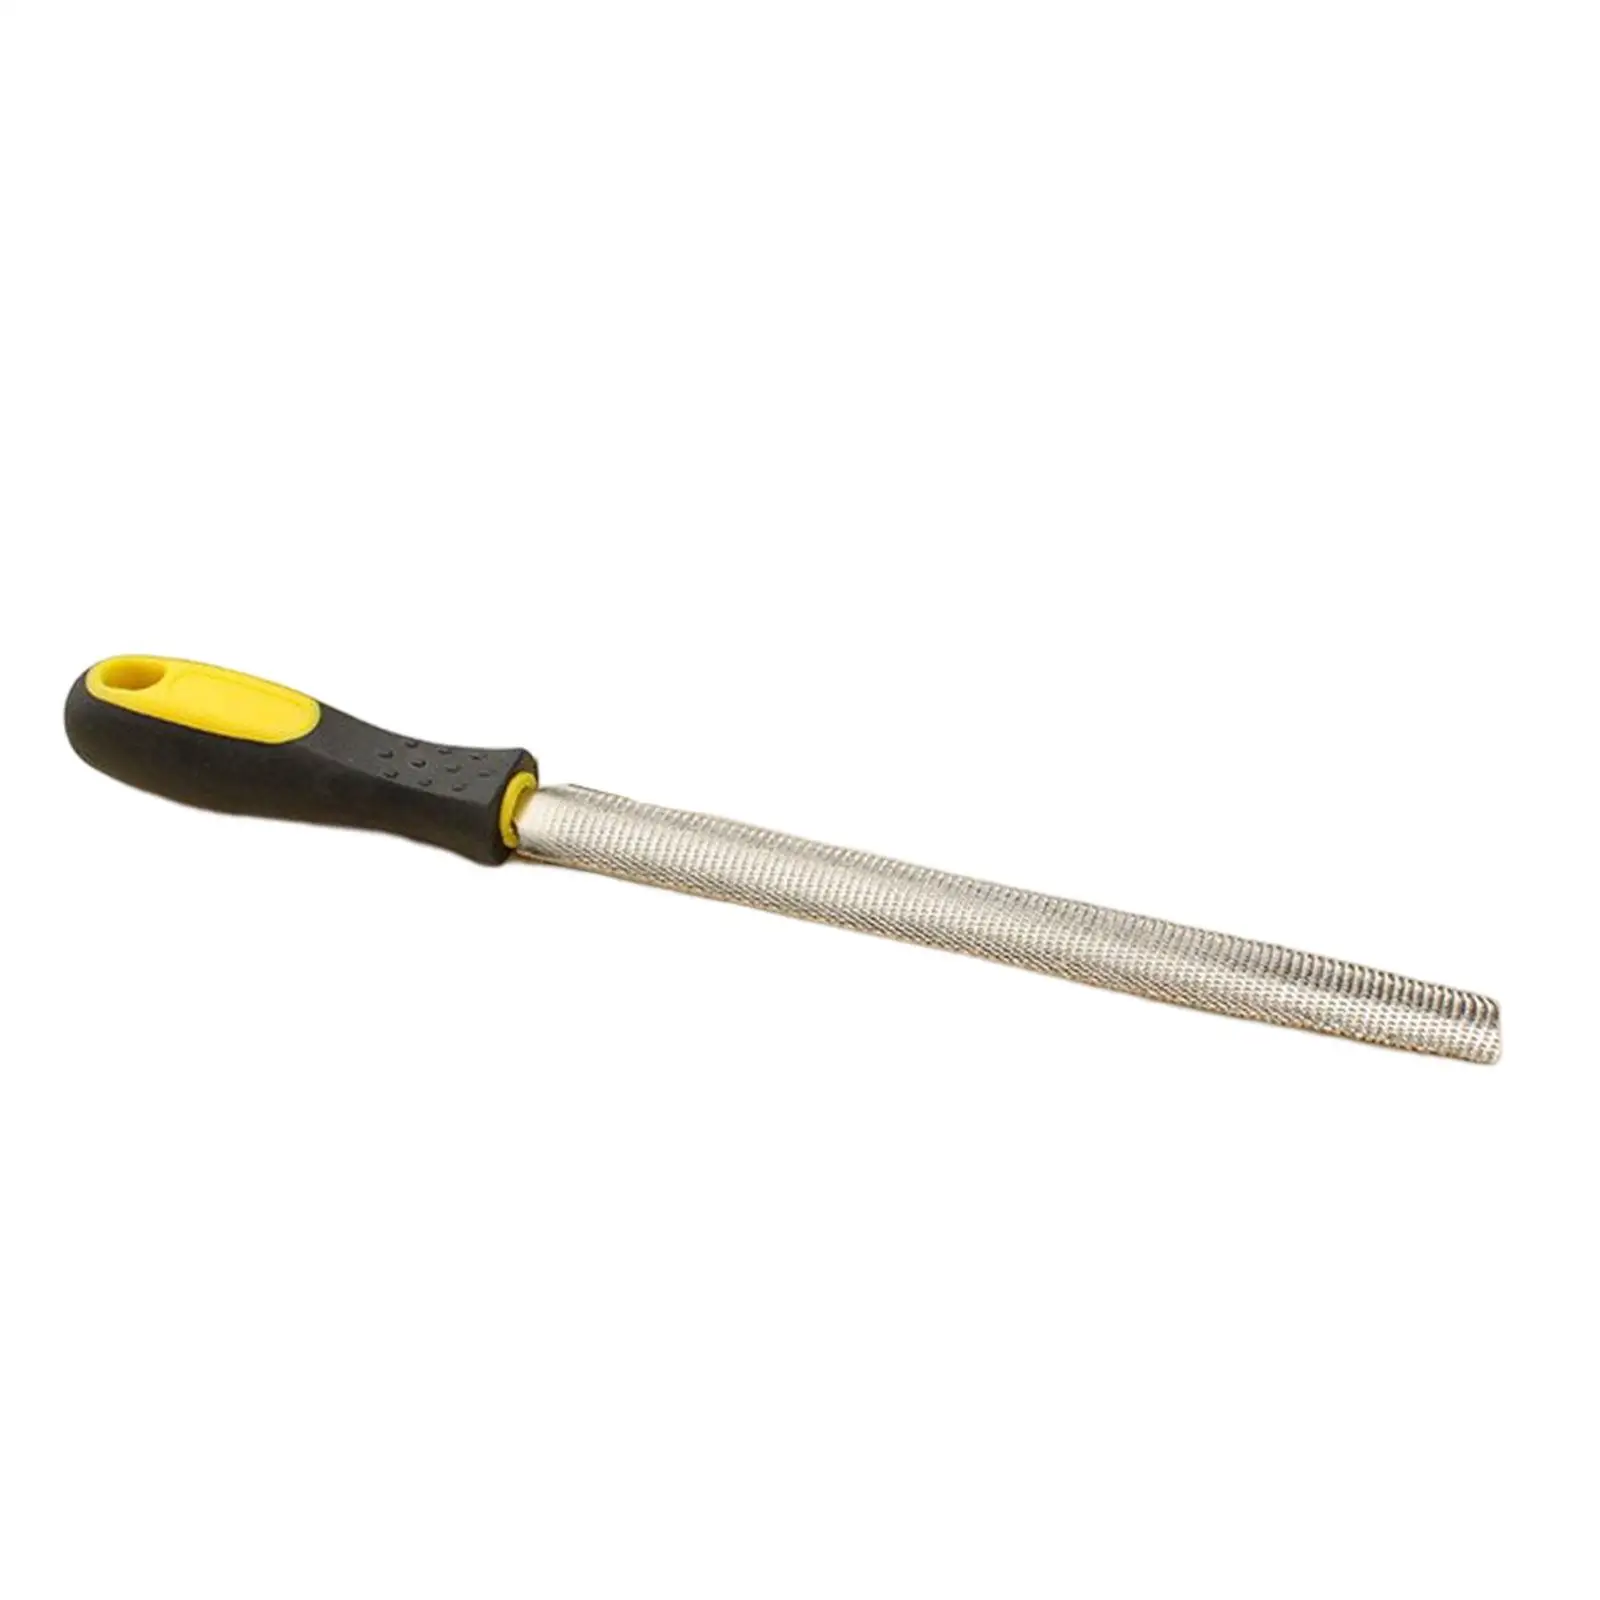 Wood Rasps Ergonomic Grip Medium Grinding Flat &Half round and round Sharpening Burrs Woodworking File Hand Tool for